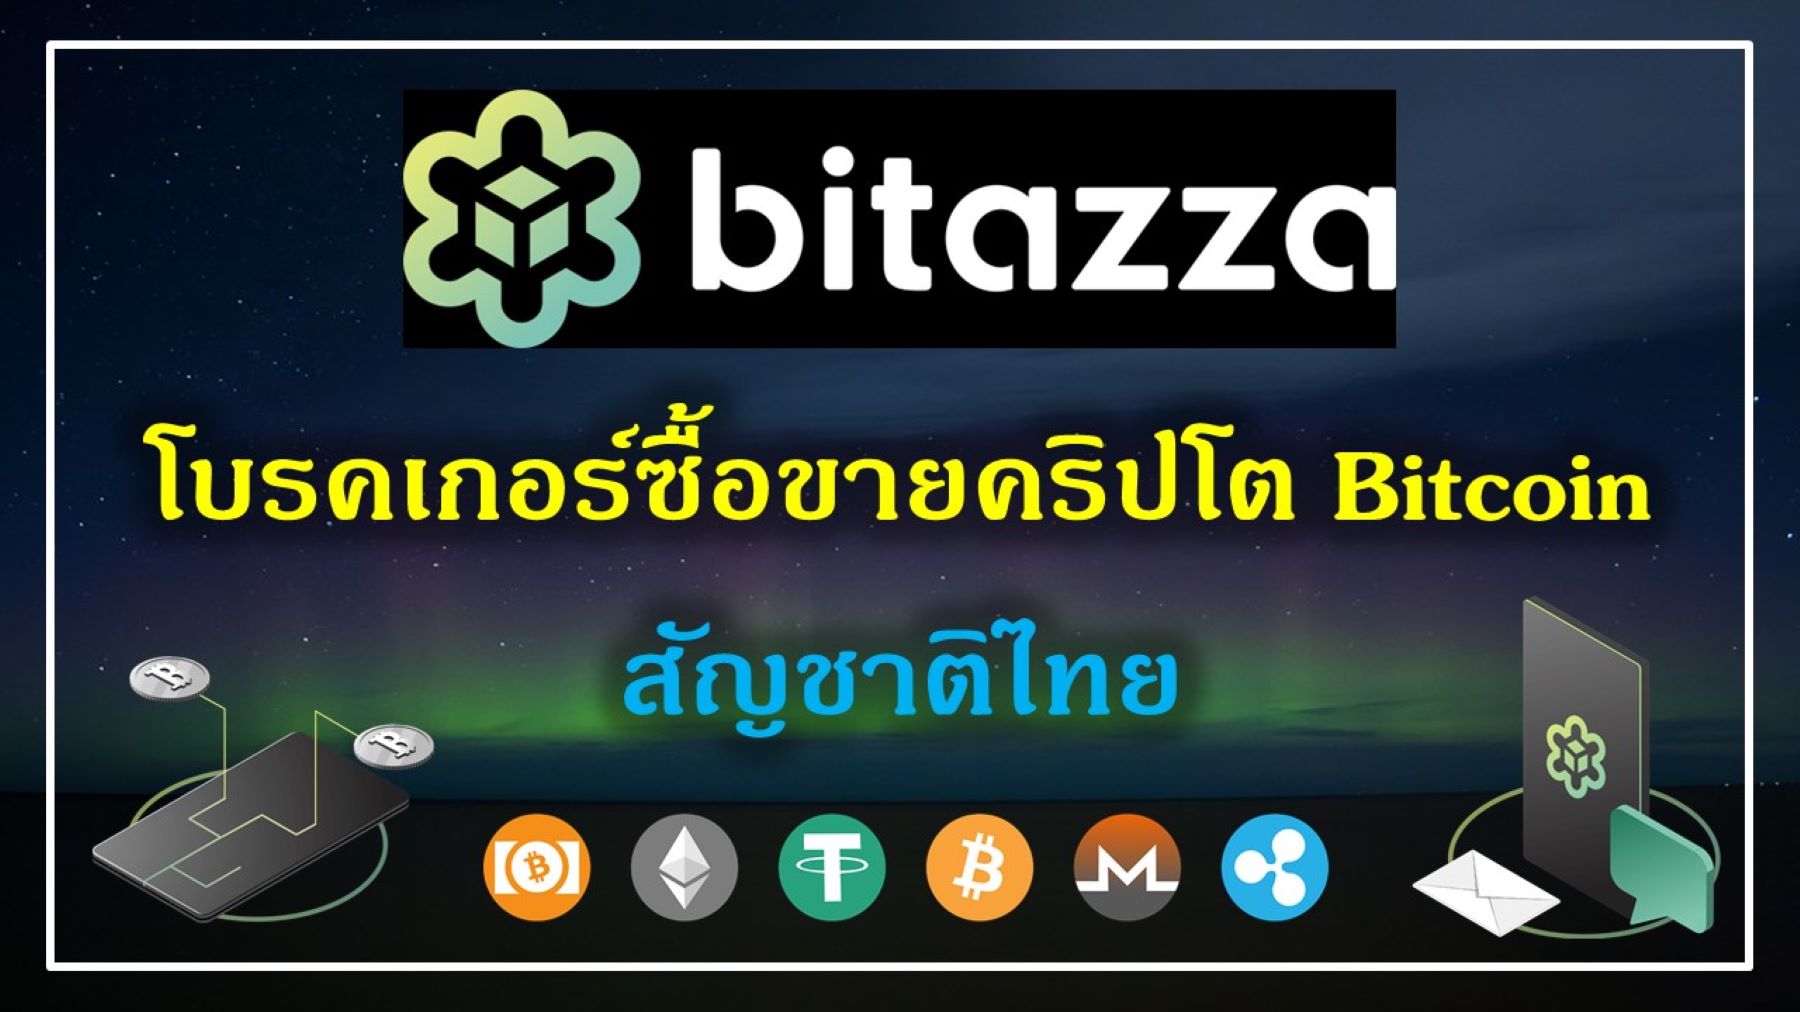 Bitazza โบรคเกอร์ซื้อขายคริปโต Bitcoin สัญชาติไทย